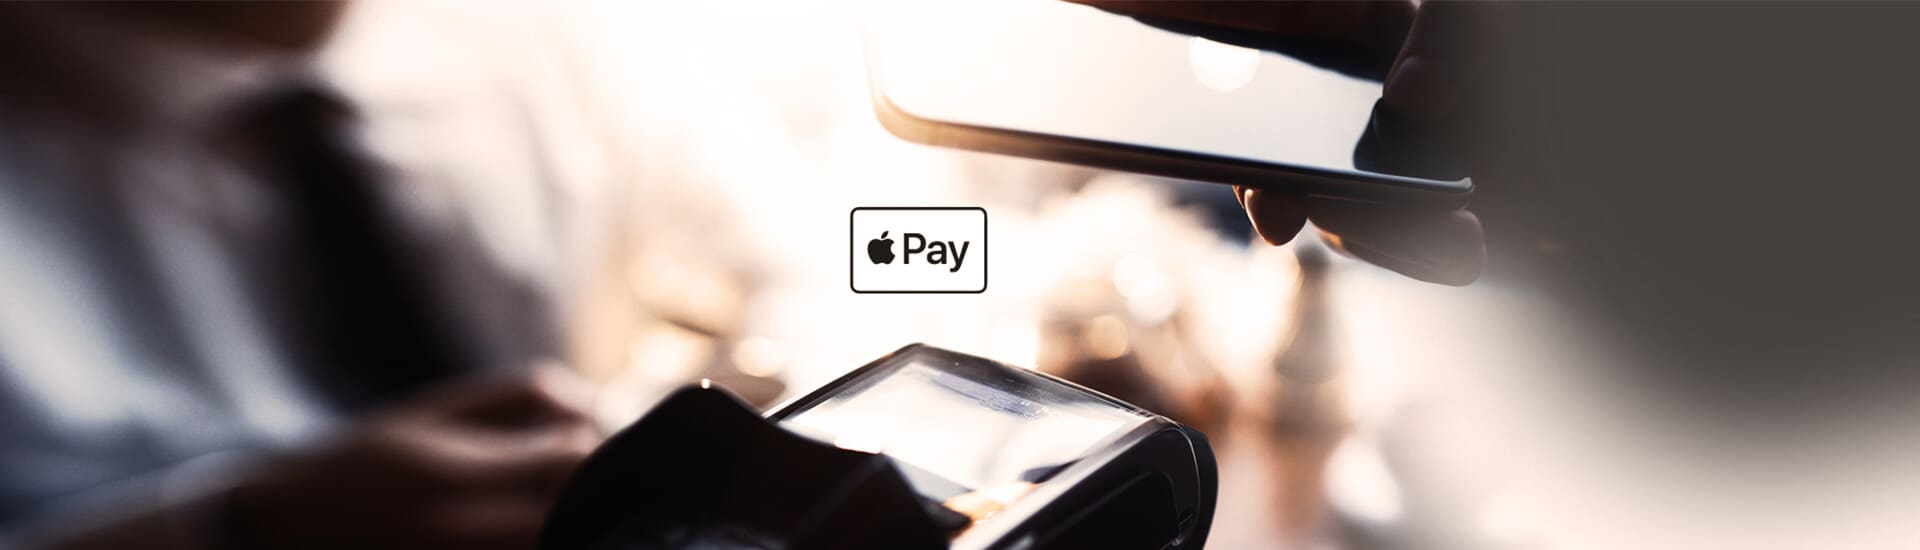 Apple Pay - Terminal & Iphone